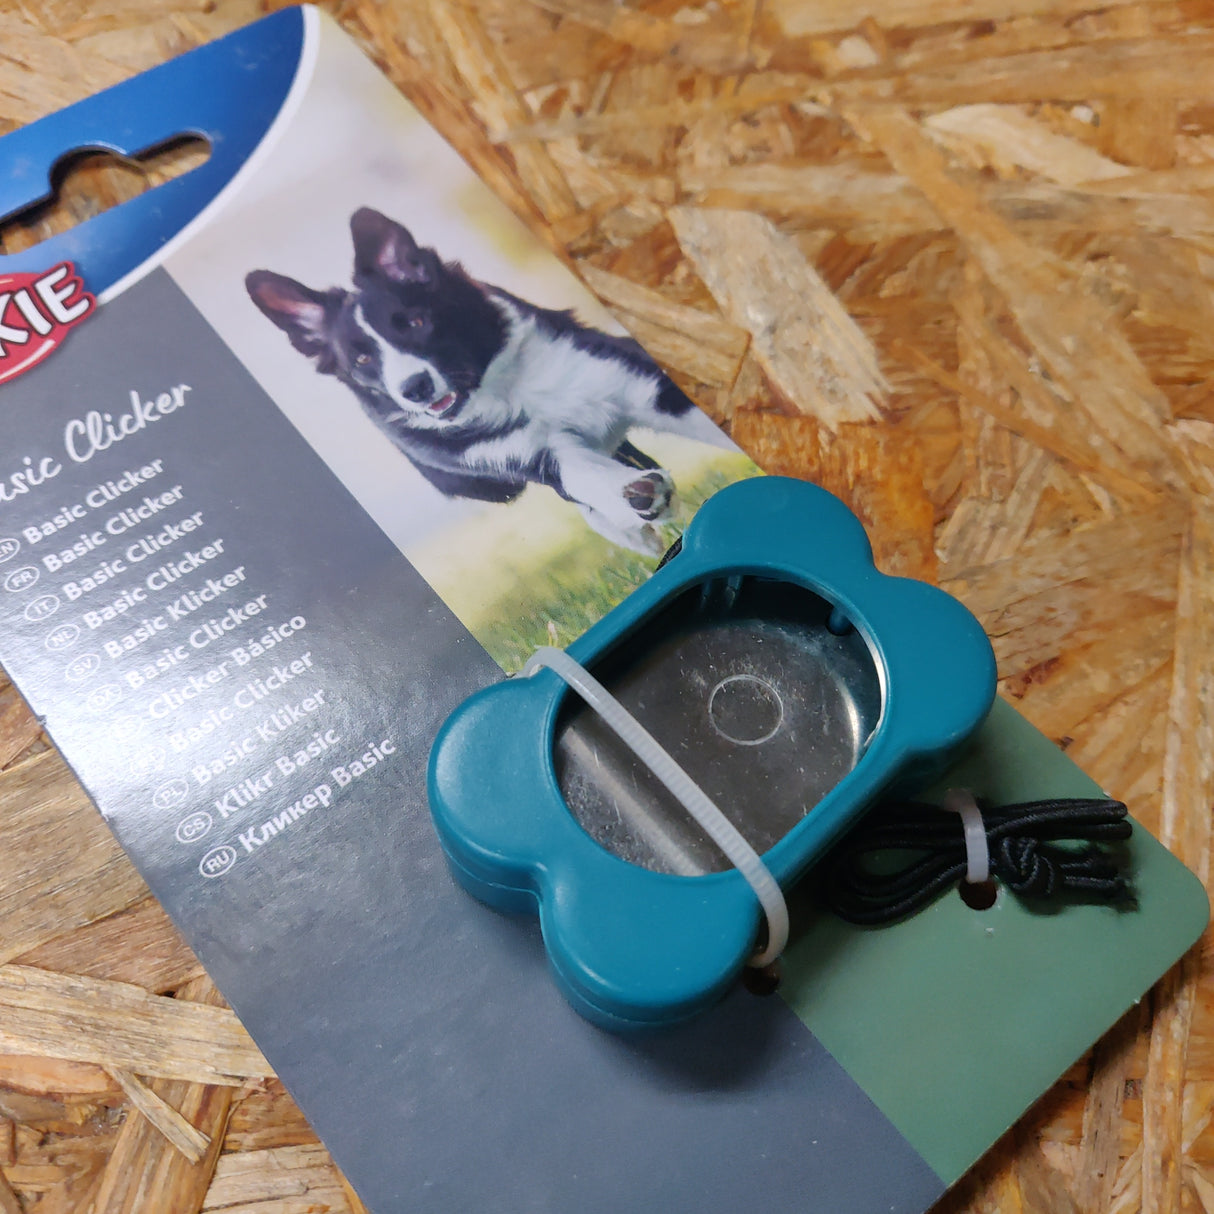 Et blåt nylon Eldorado hundeben legetøj på et træbord.